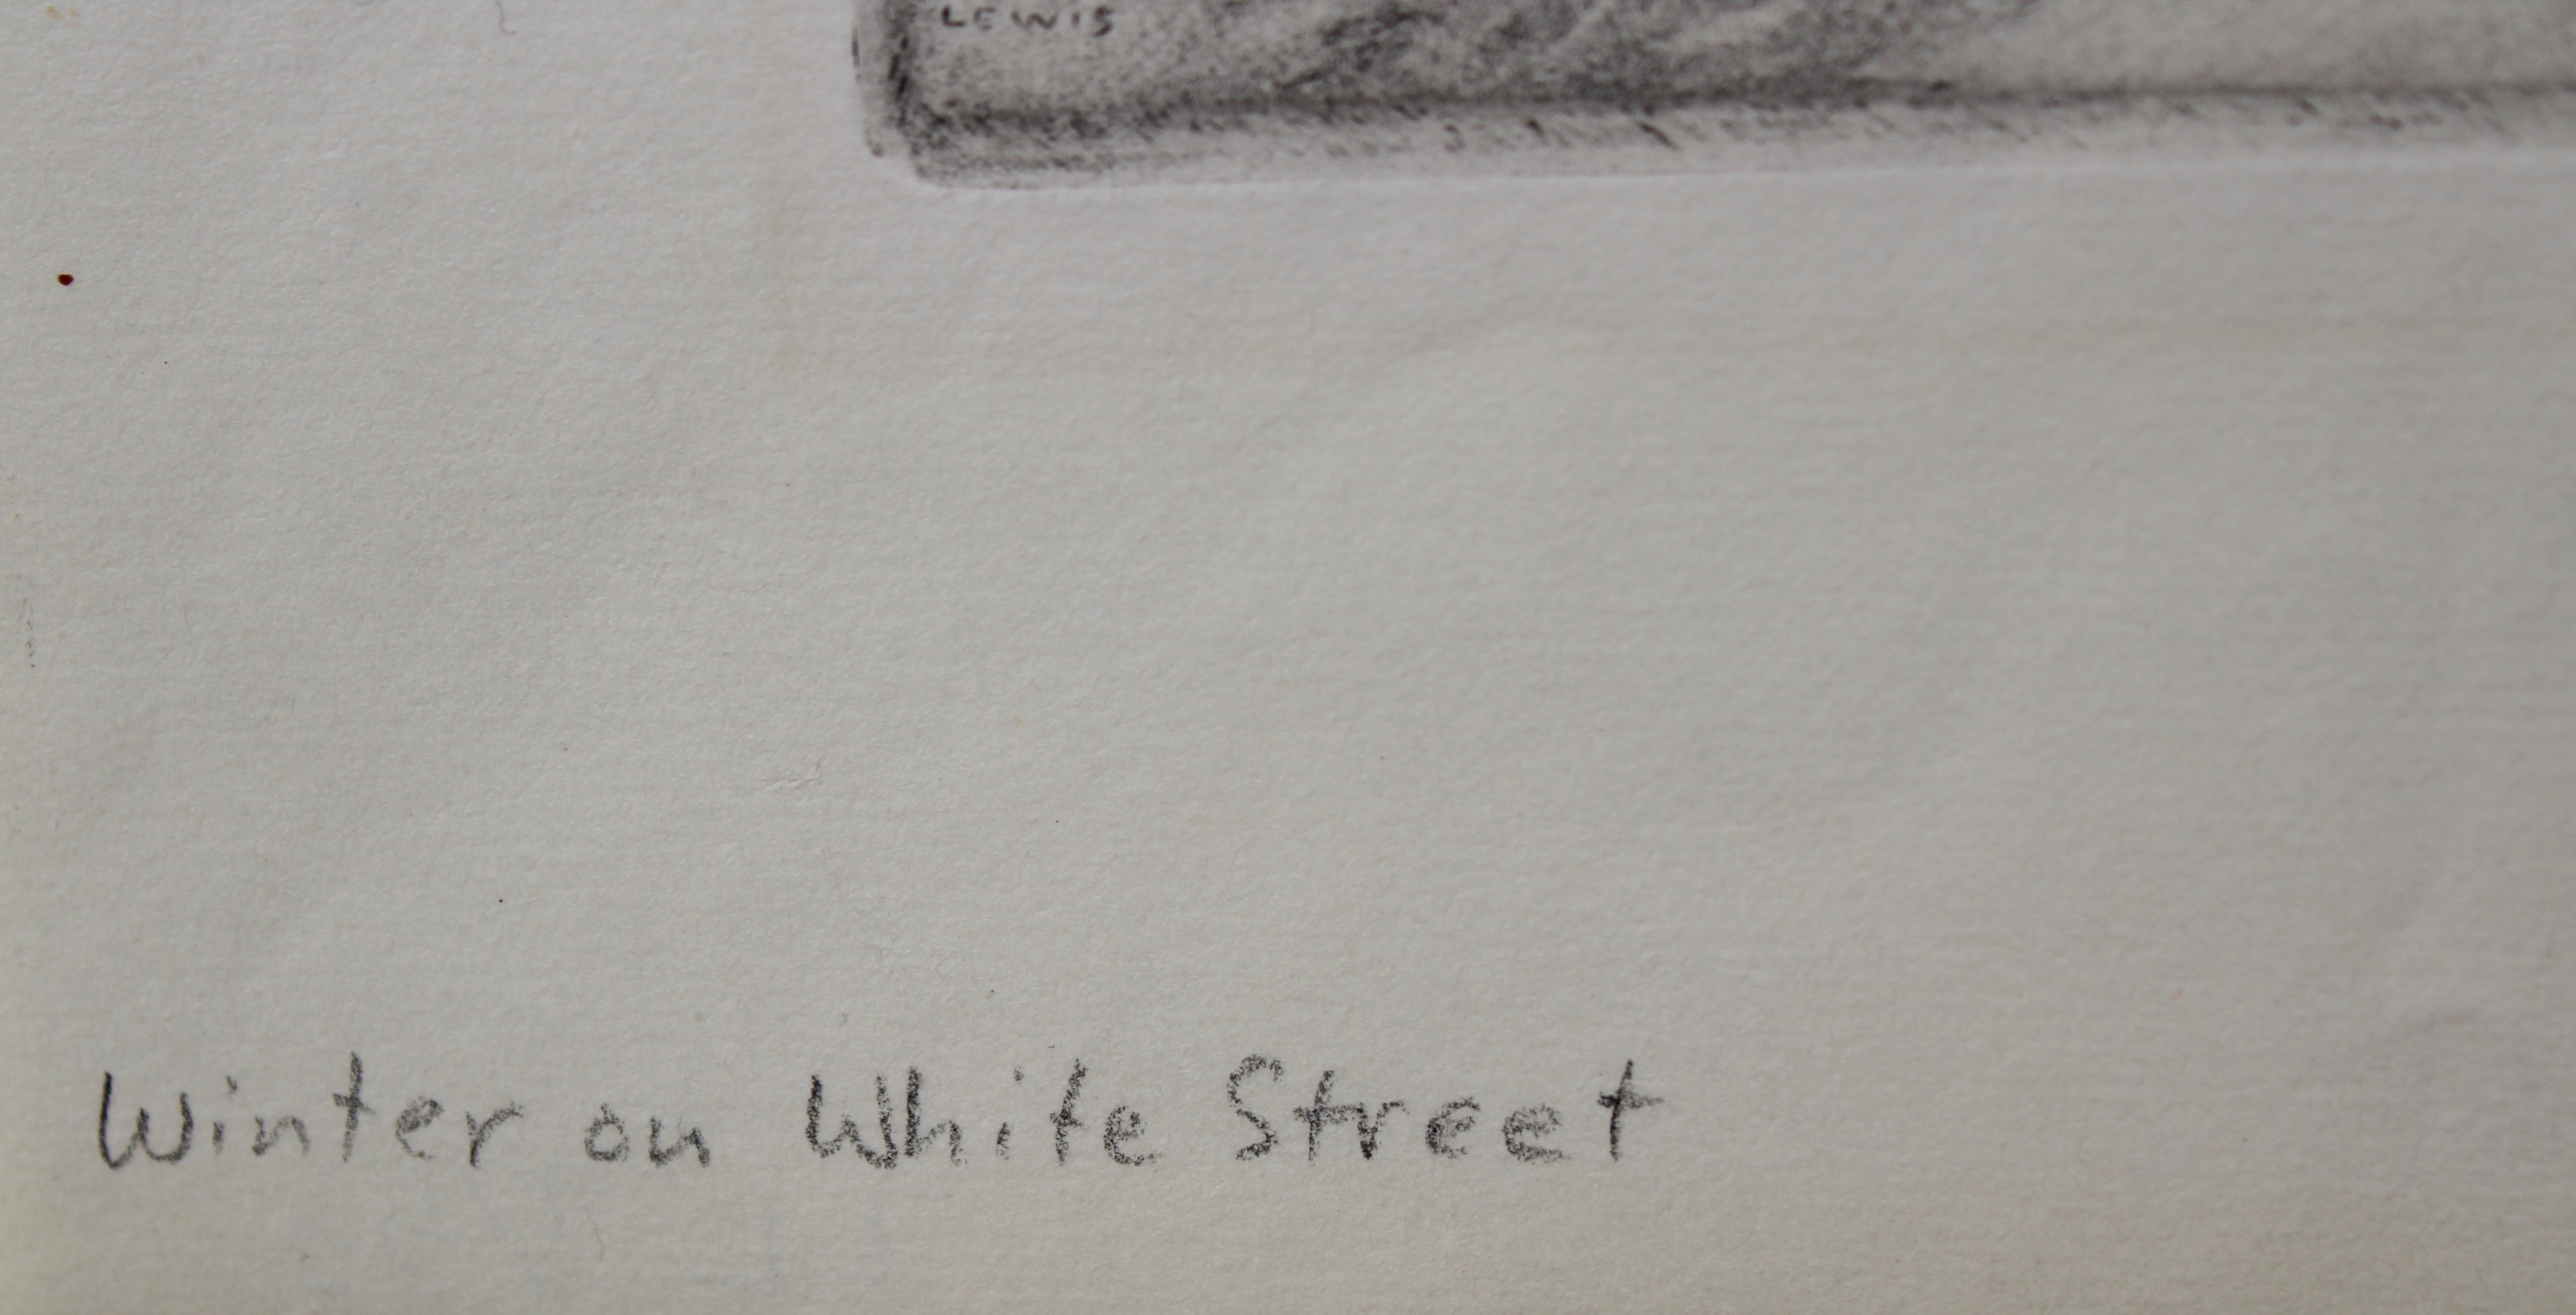 Martin Lewis (1881-1962) "Winter on White Street" - Image 5 of 10